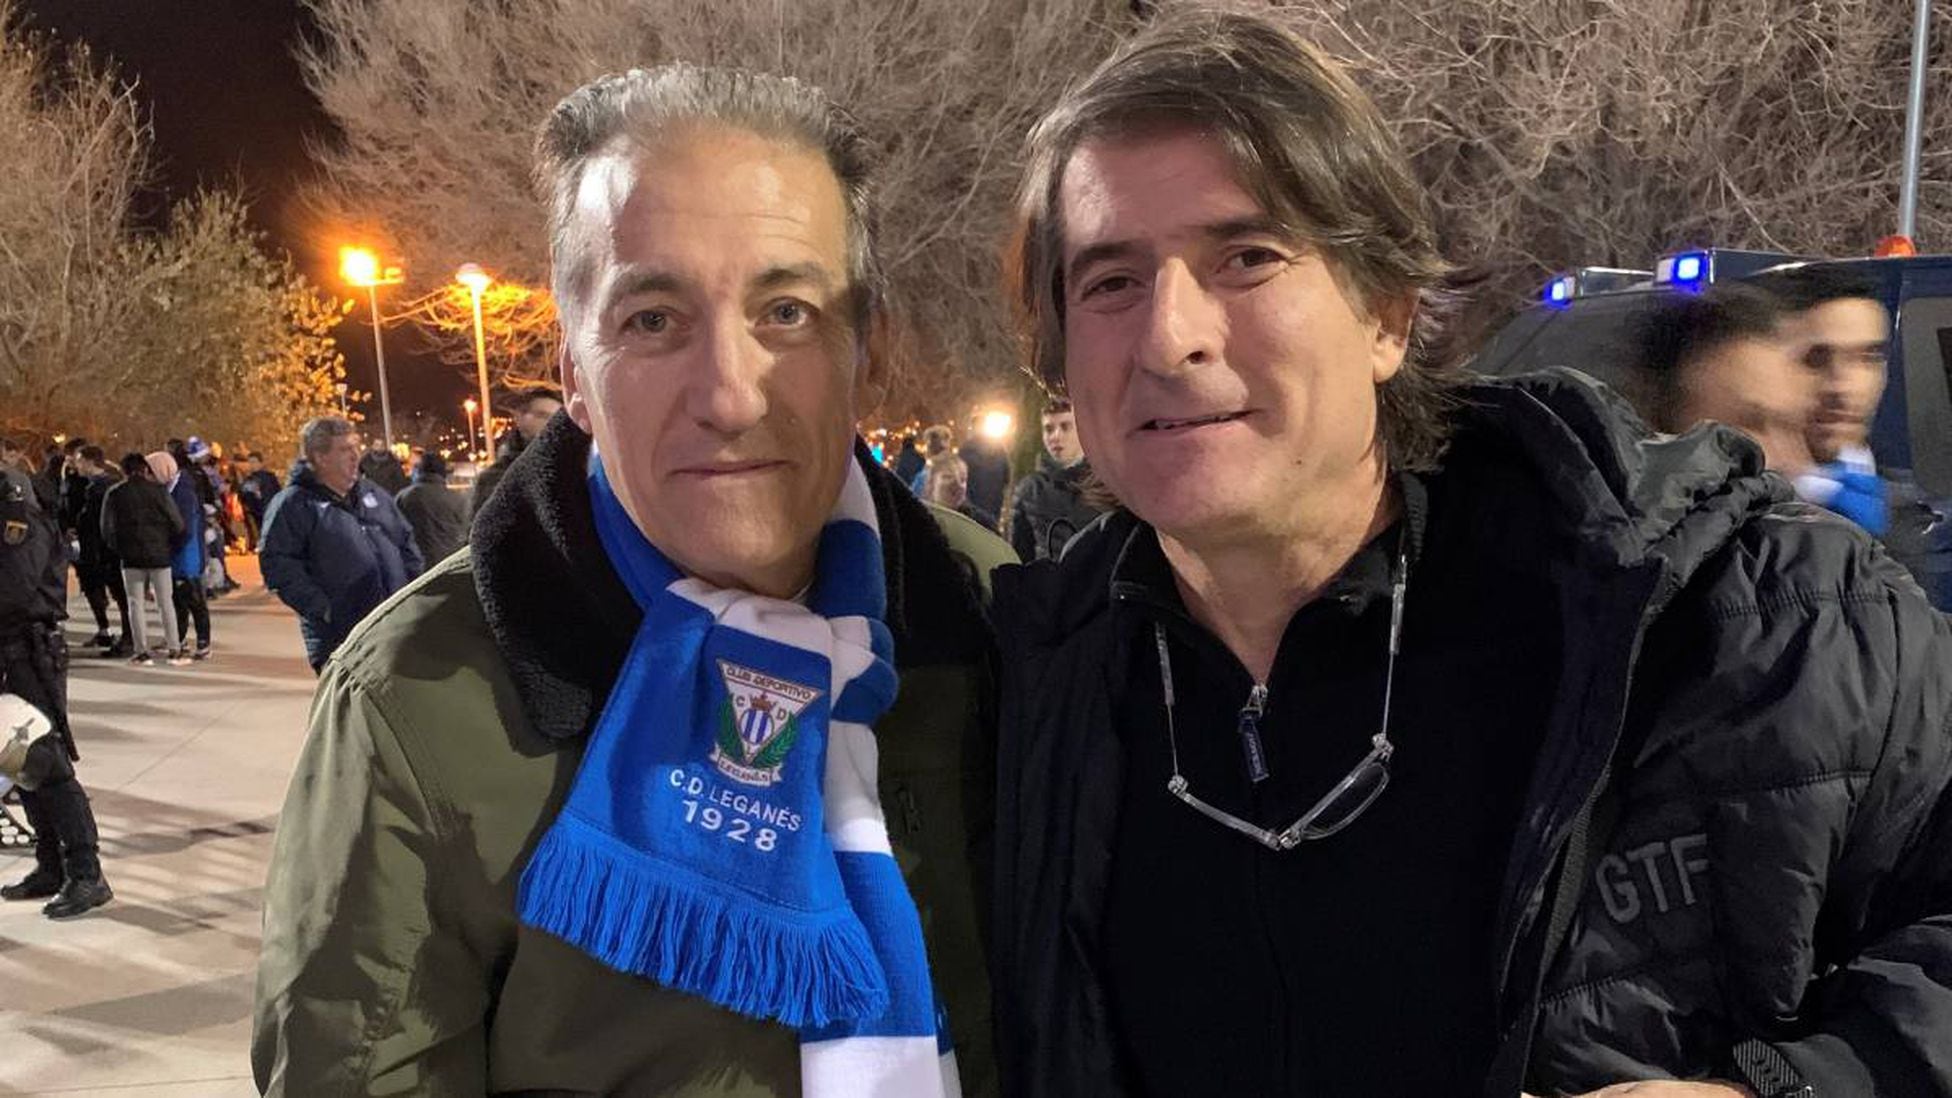 bufanda Club fútbol Getafe Azulones Geta madrid españa 